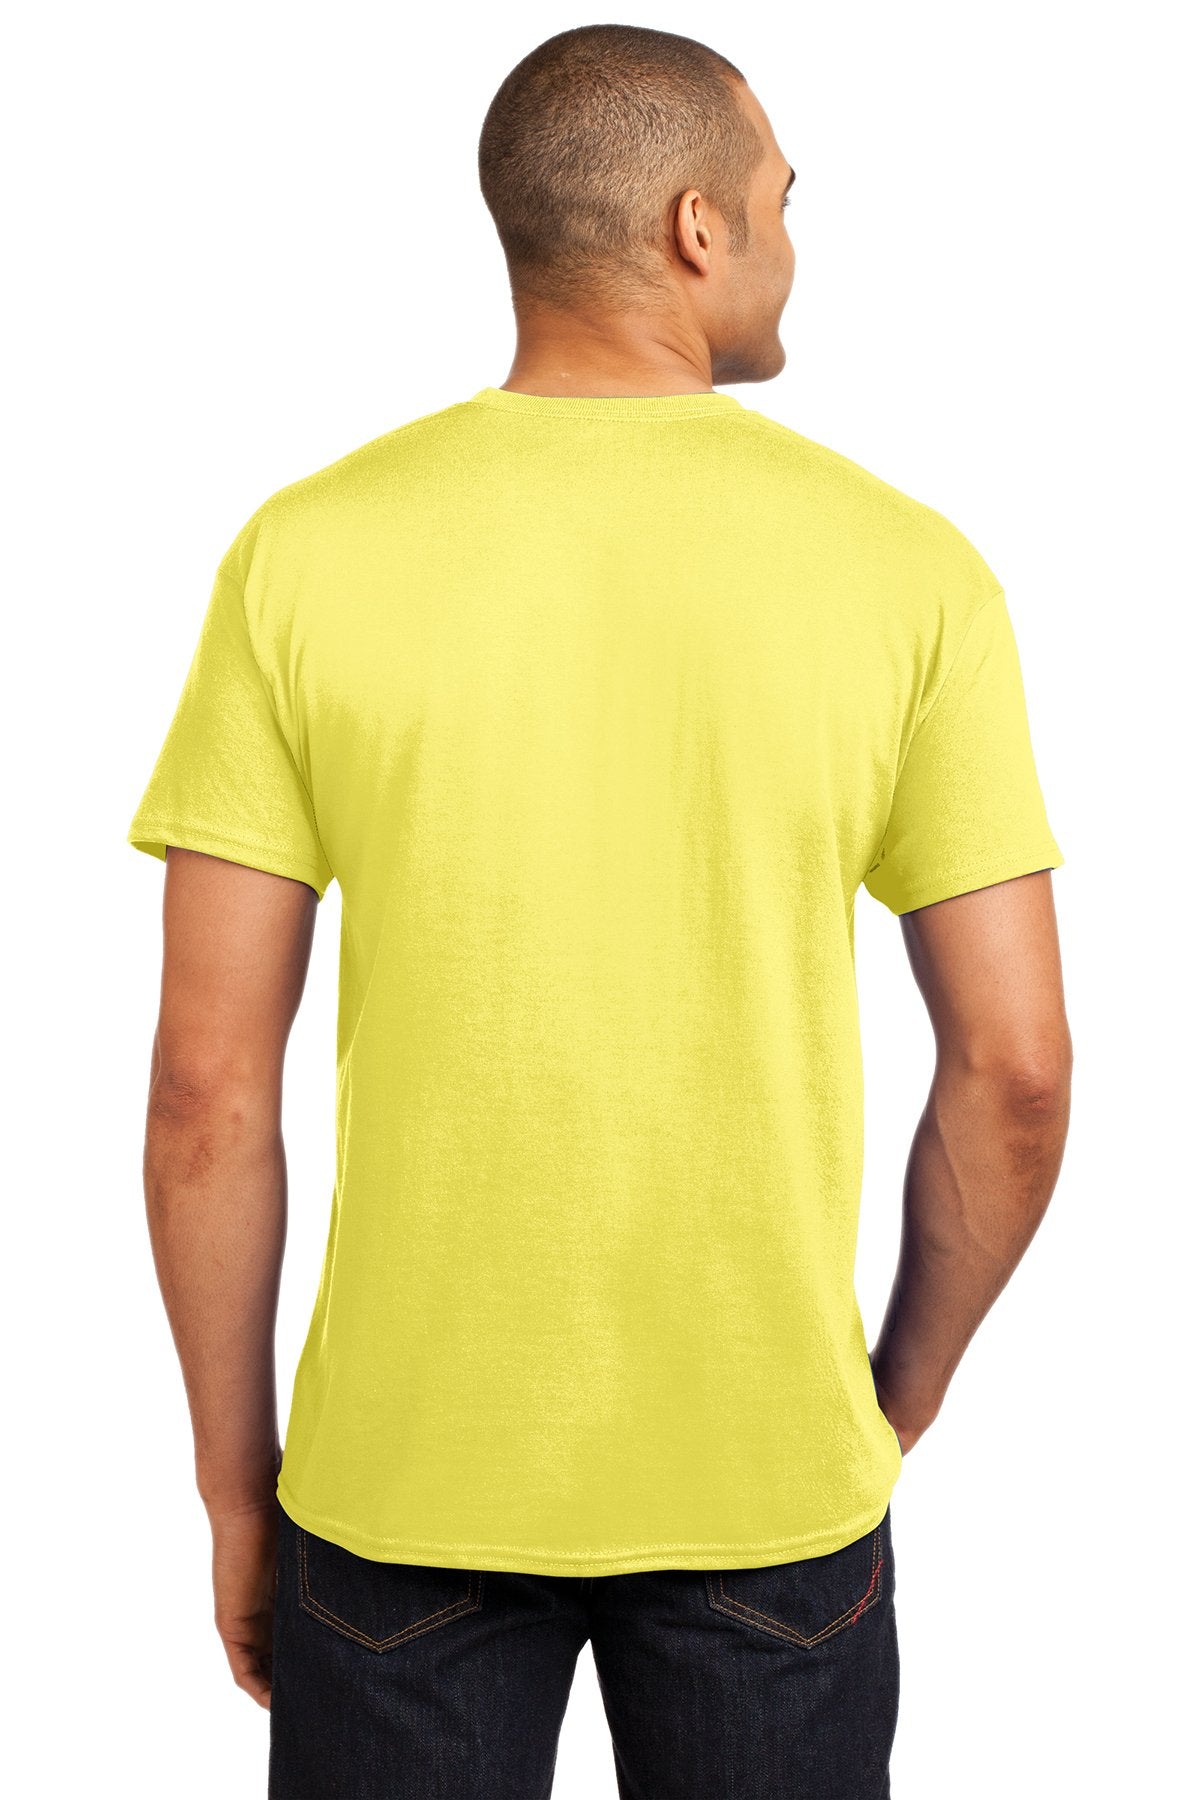 hanes ecosmart 50 50 cotton/poly t shirt 5170 yellow